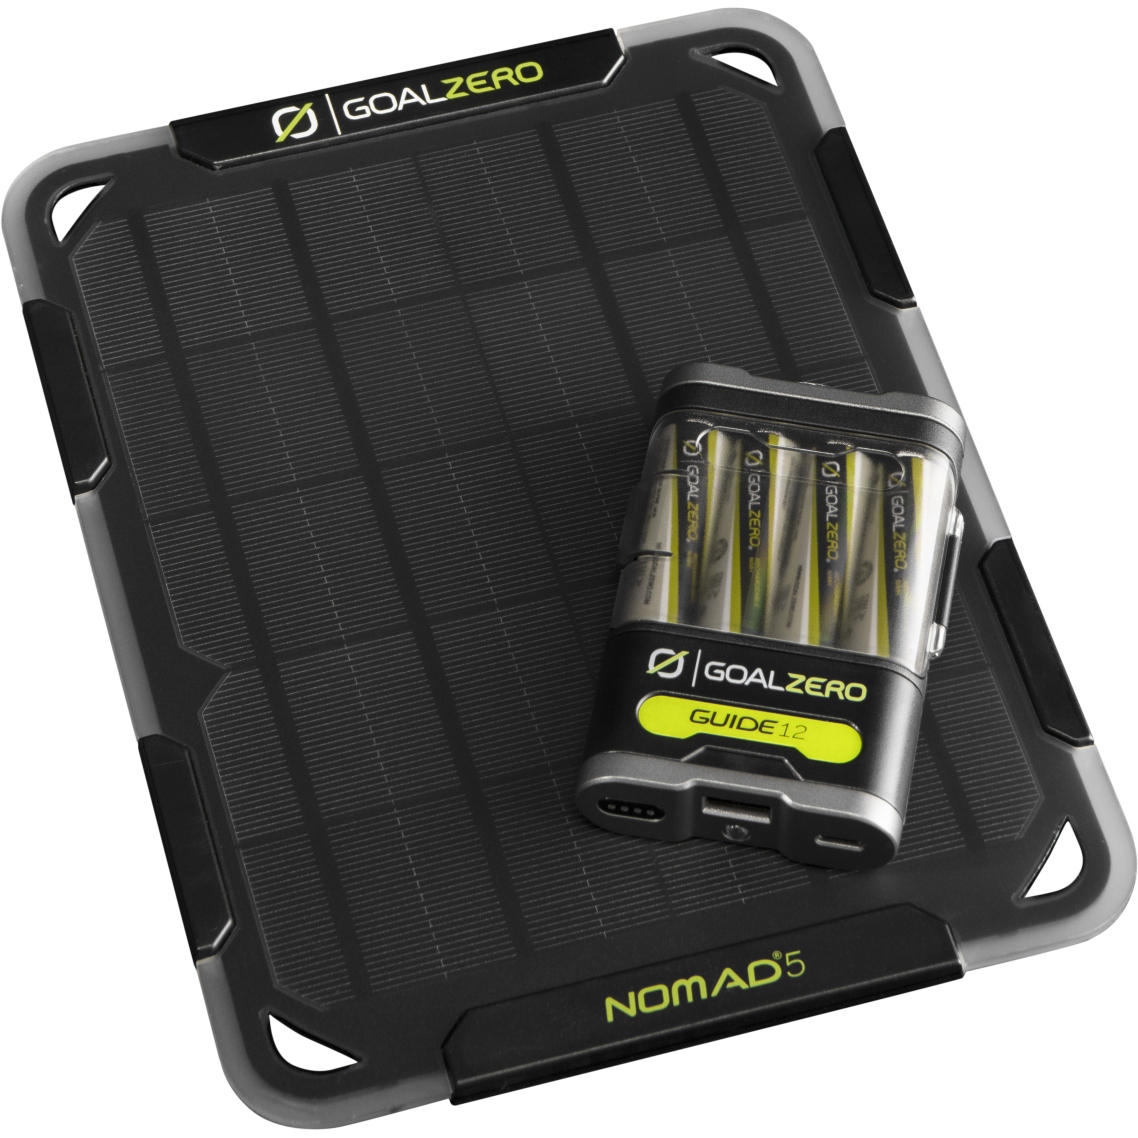 Productfoto van Goal Zero Guide 12 + Nomad 5 Solar Kit